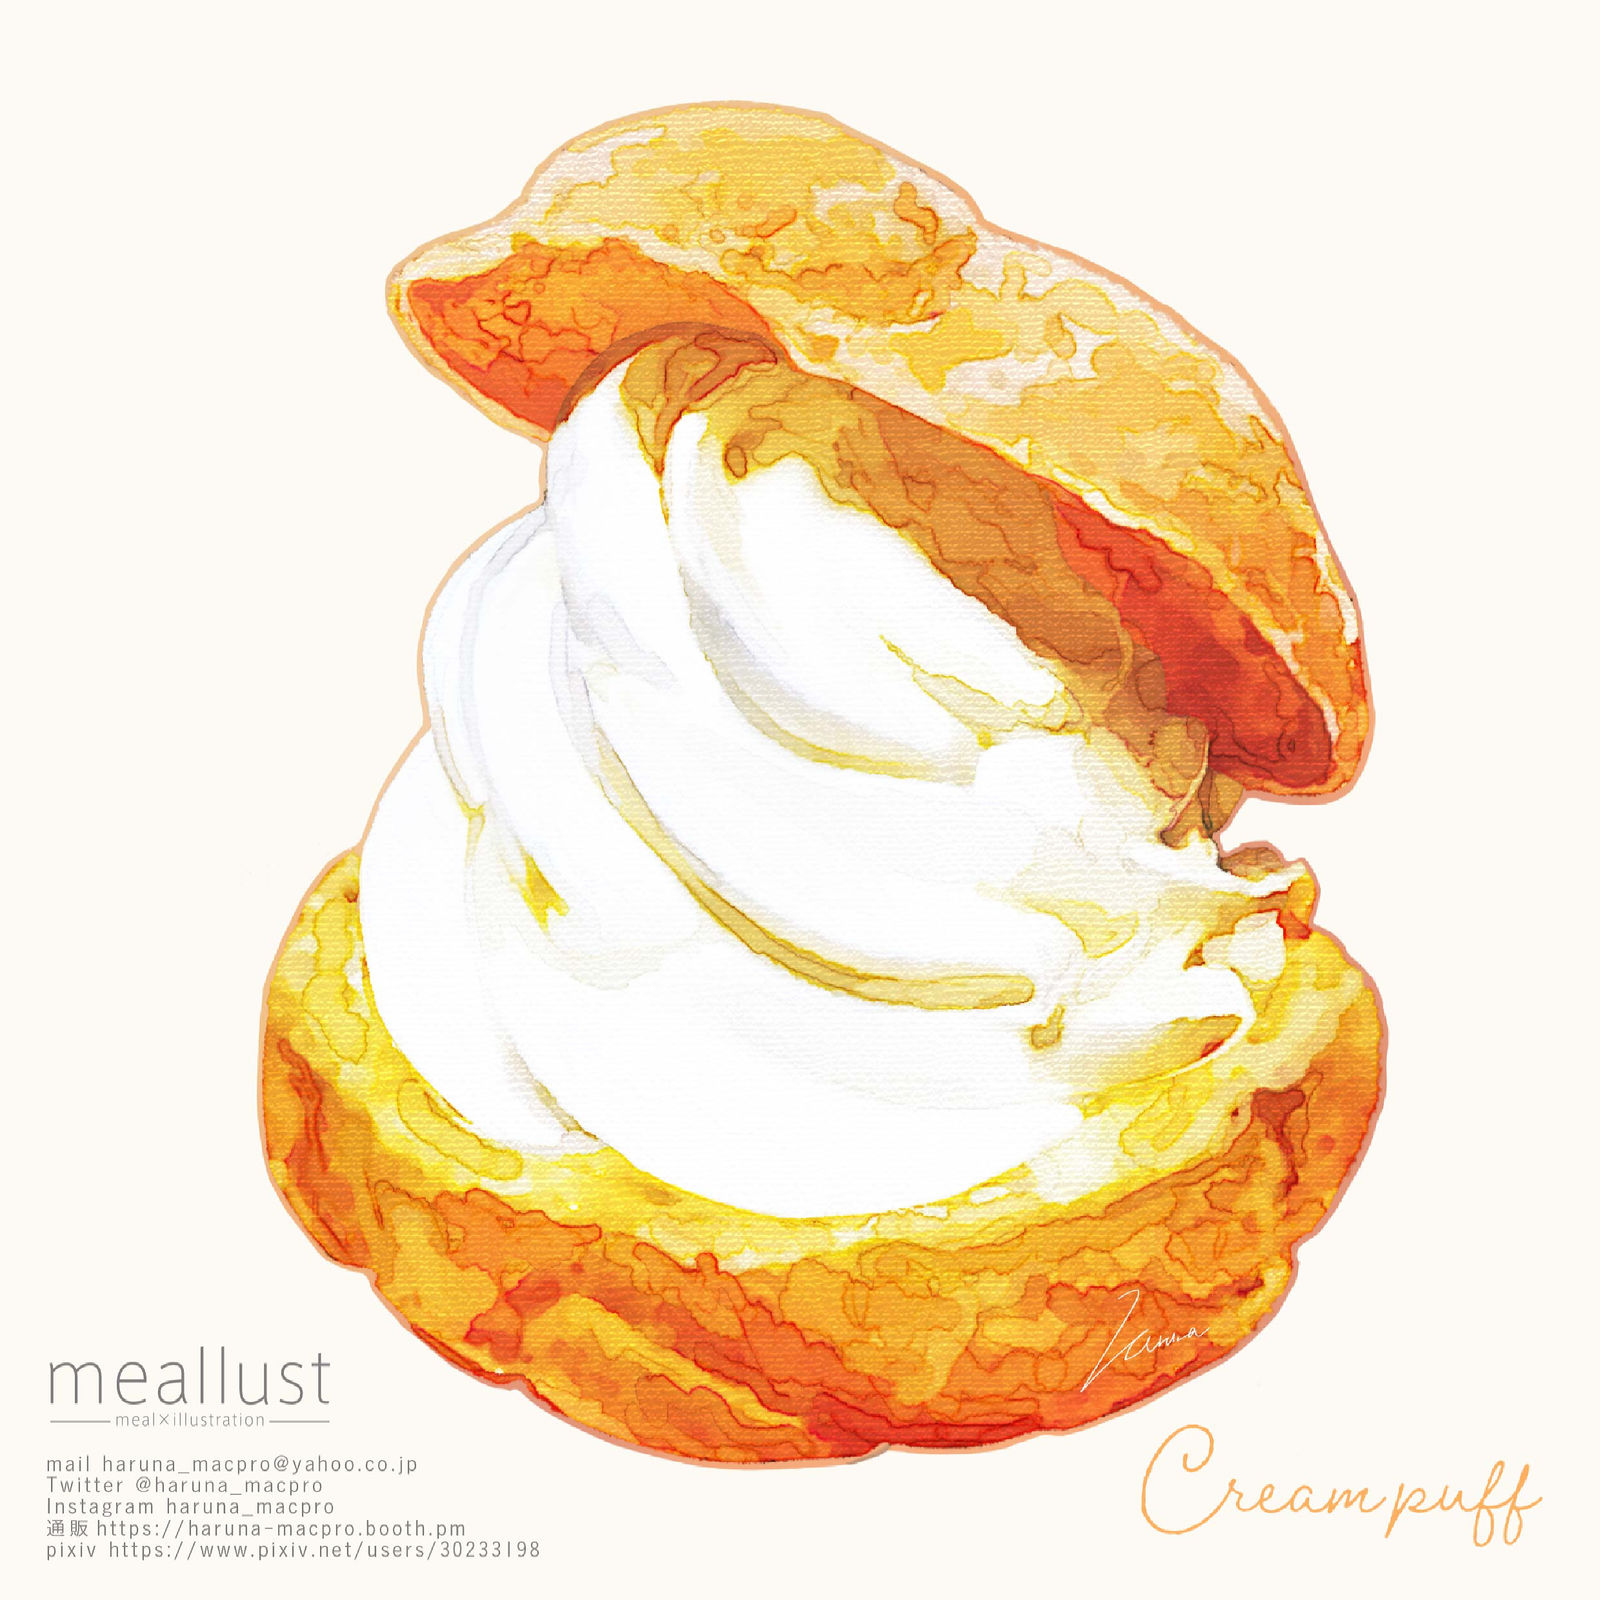 Cream puff插画图片壁纸